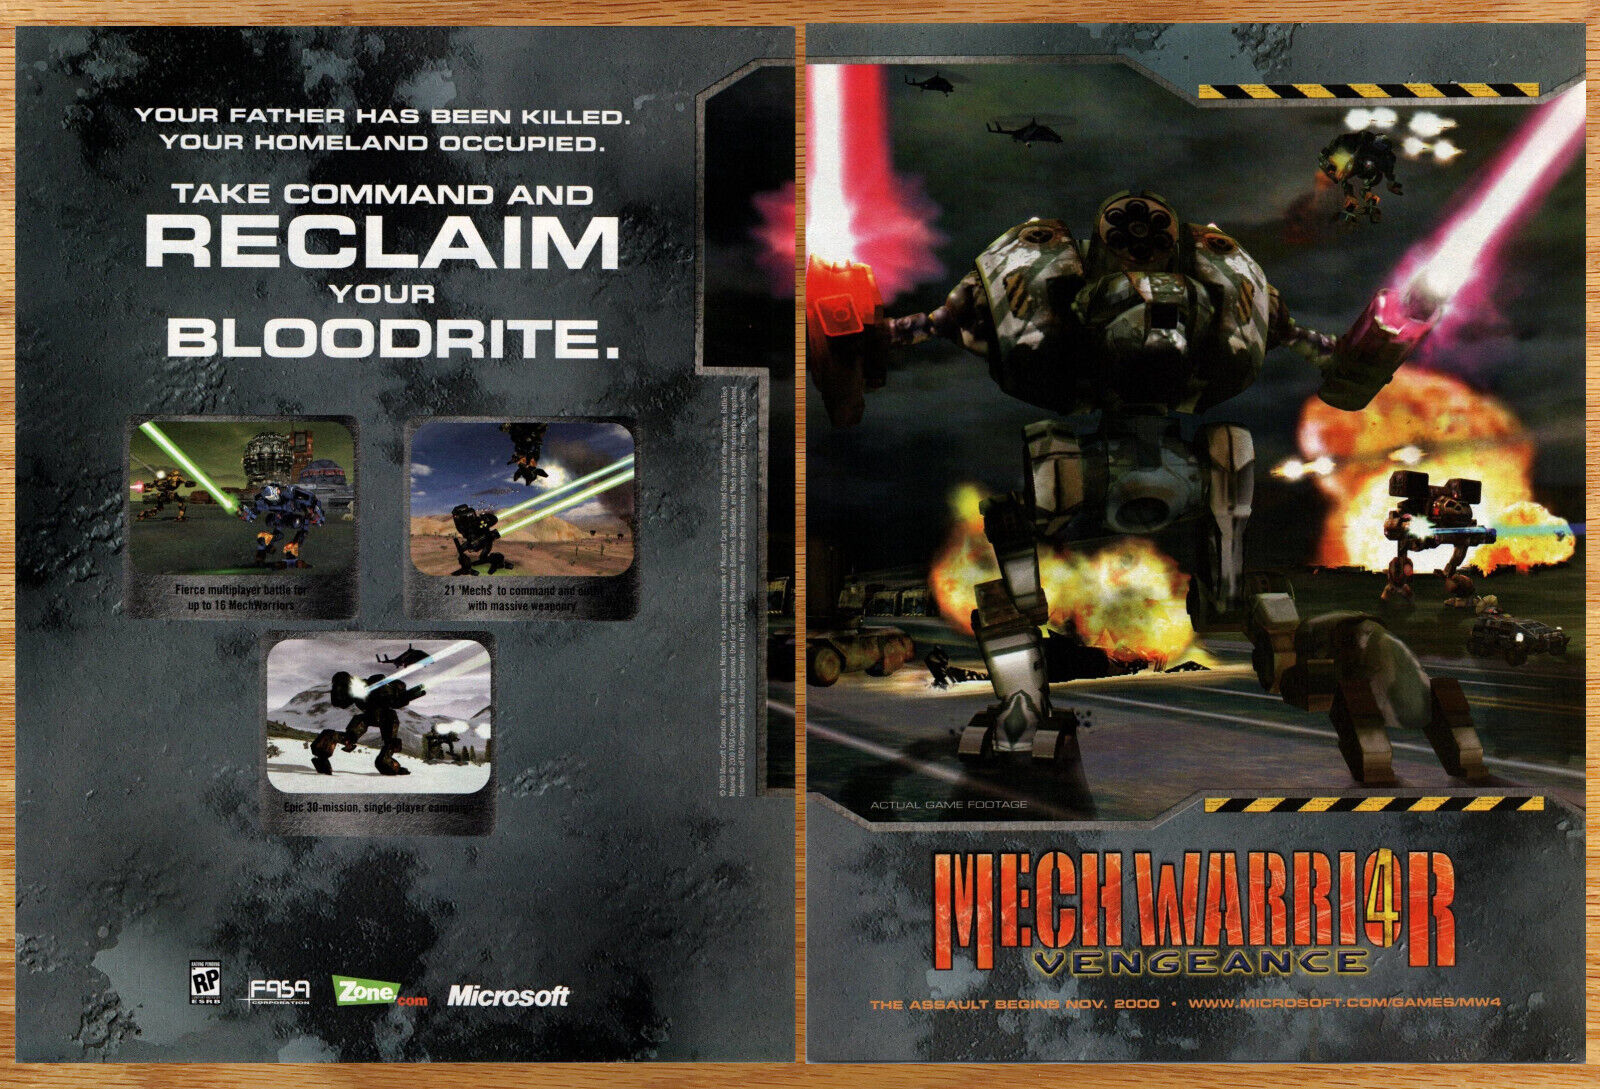 Mech Warrior 4 Vengeance Microsoft - 2 Page Game Print Ad Poster Promo Art 2000